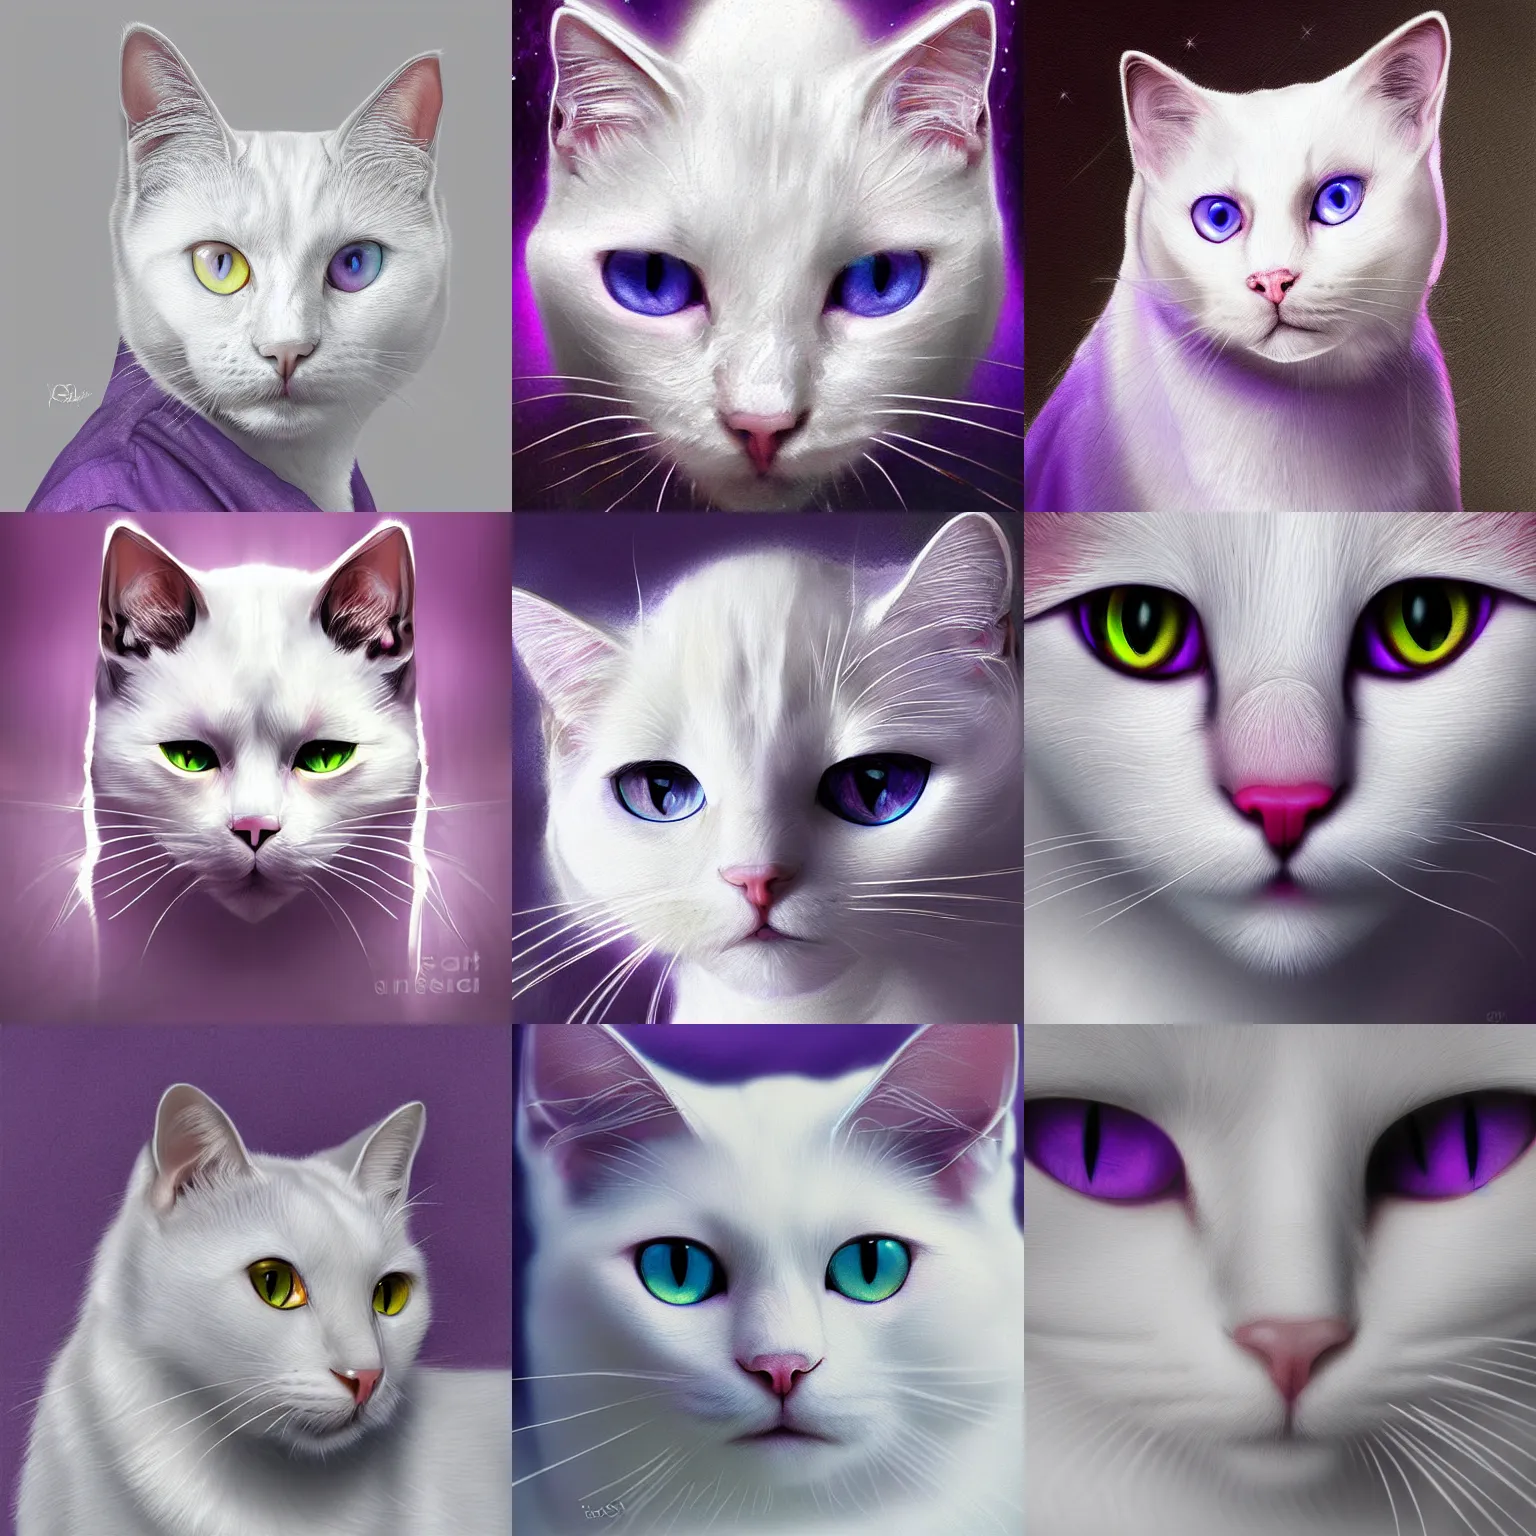 Prompt: Portrait of a white cat, purple eyes, fantasy, digital art, HD, detailed.